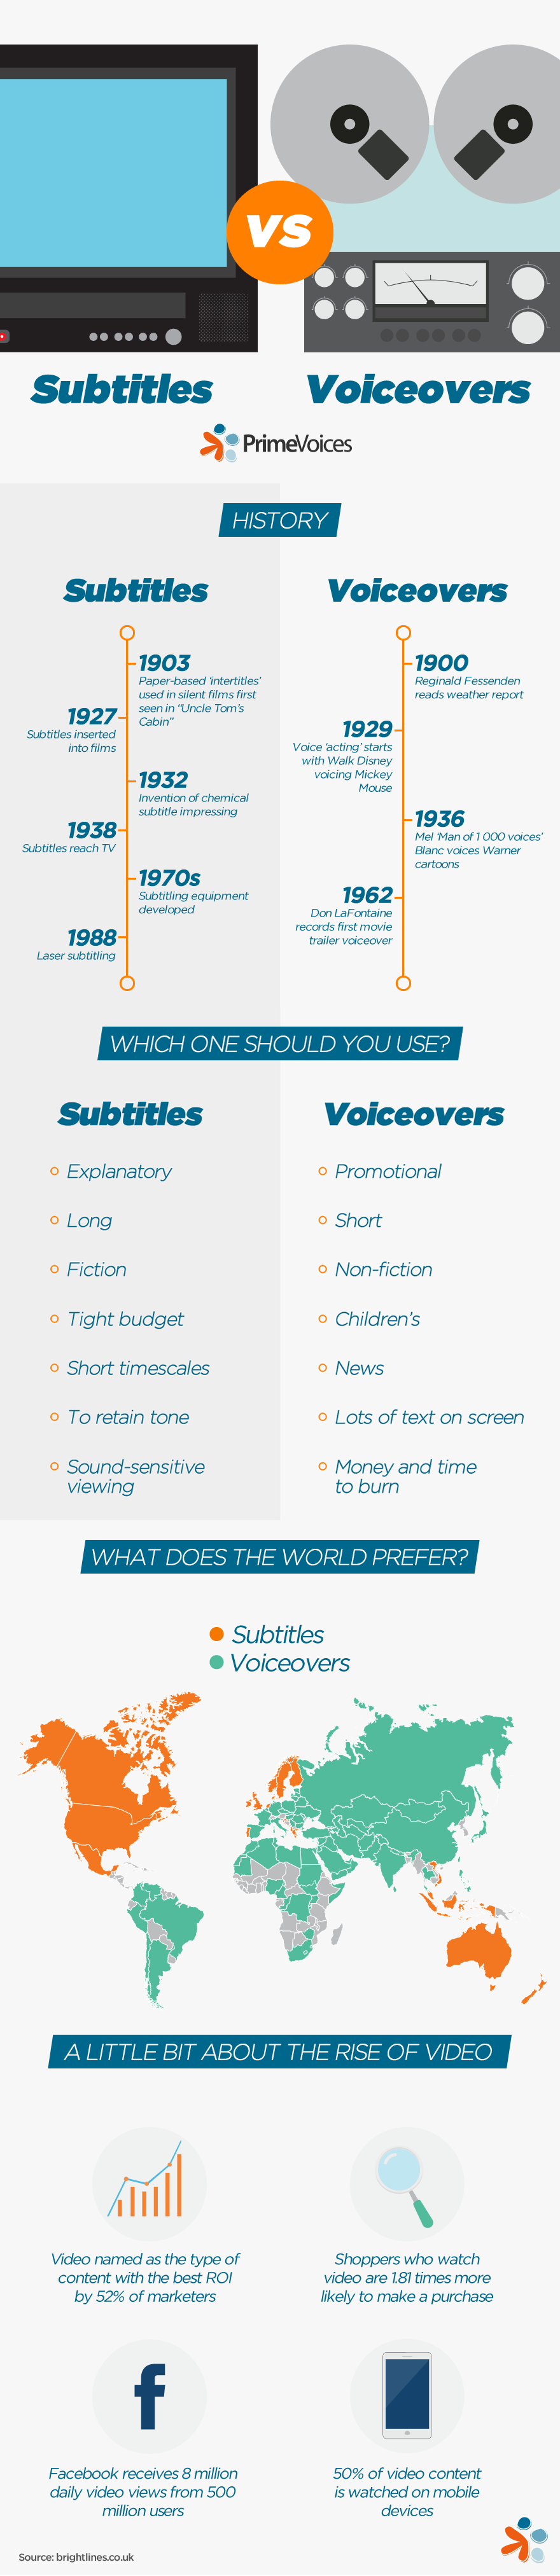 Subtitles vs Voiceovers